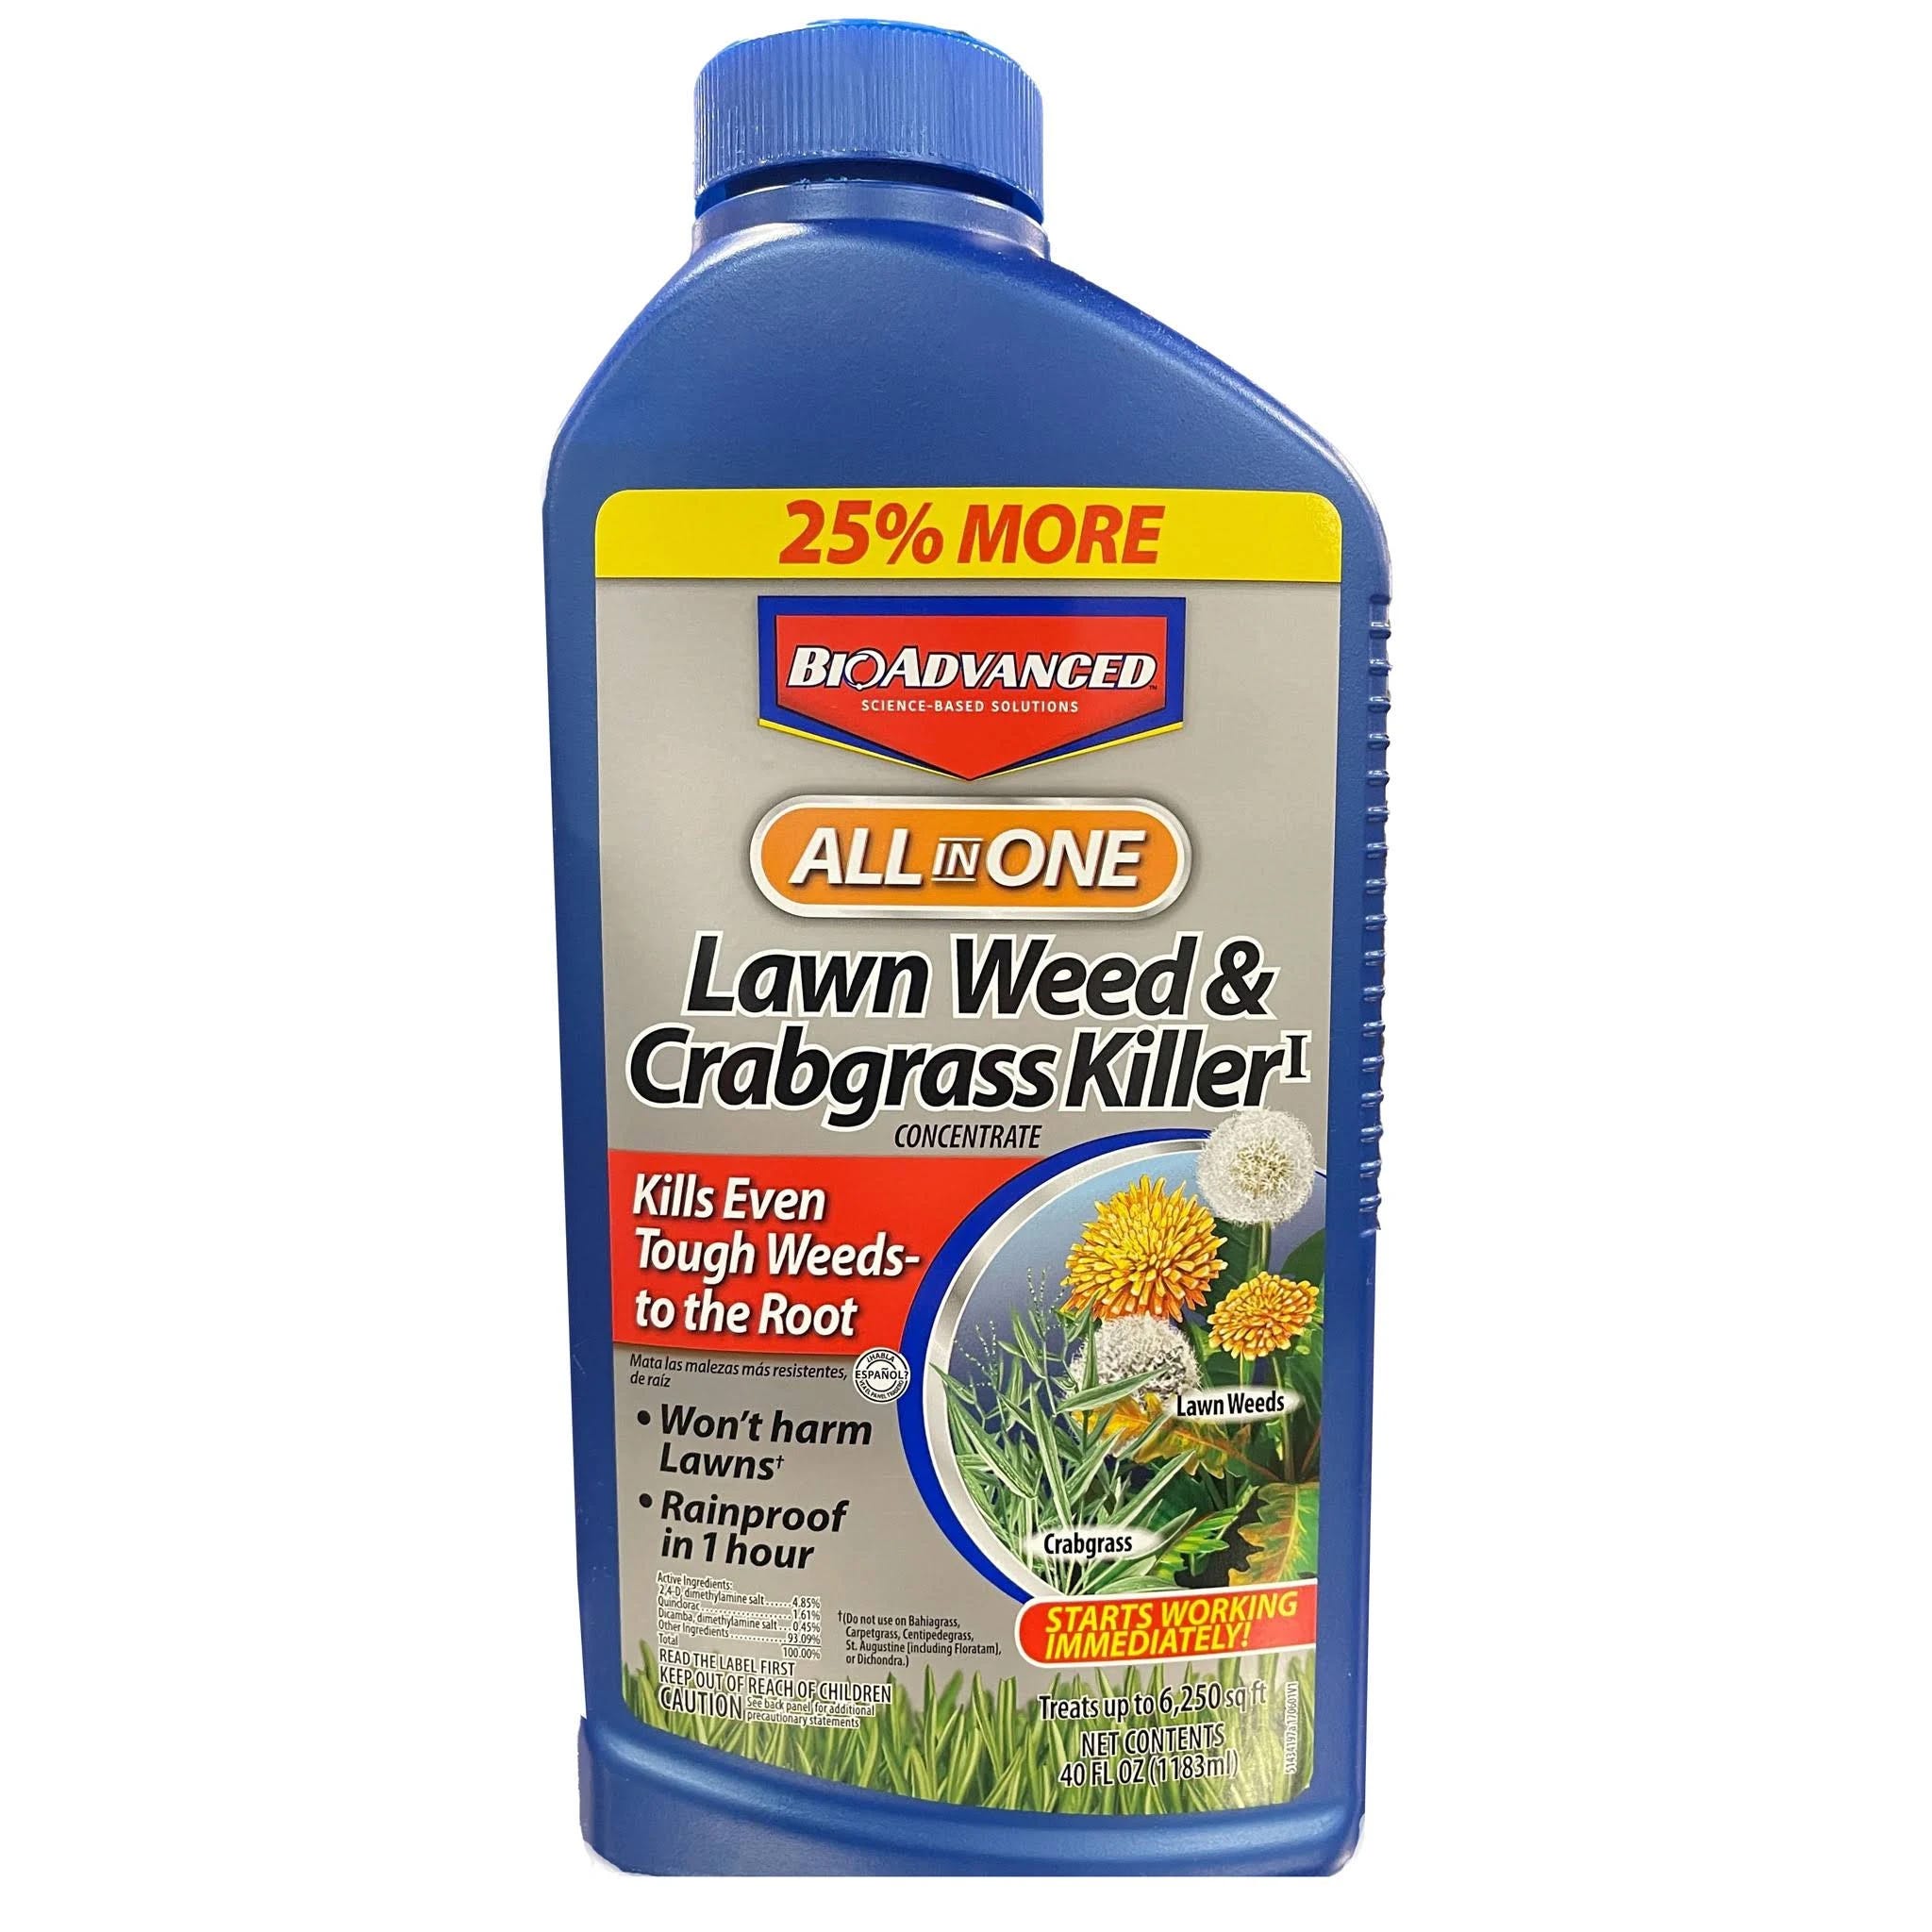 Pet Safe Lawn Weed & Crabgrass Killer by Bioadvanced | Image